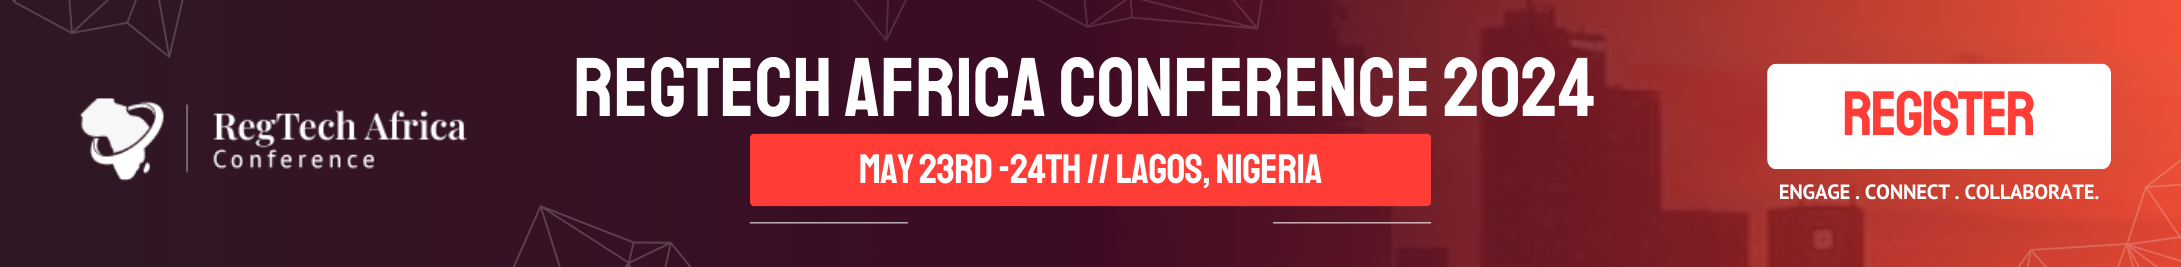 RegTech Africa Conference 2024